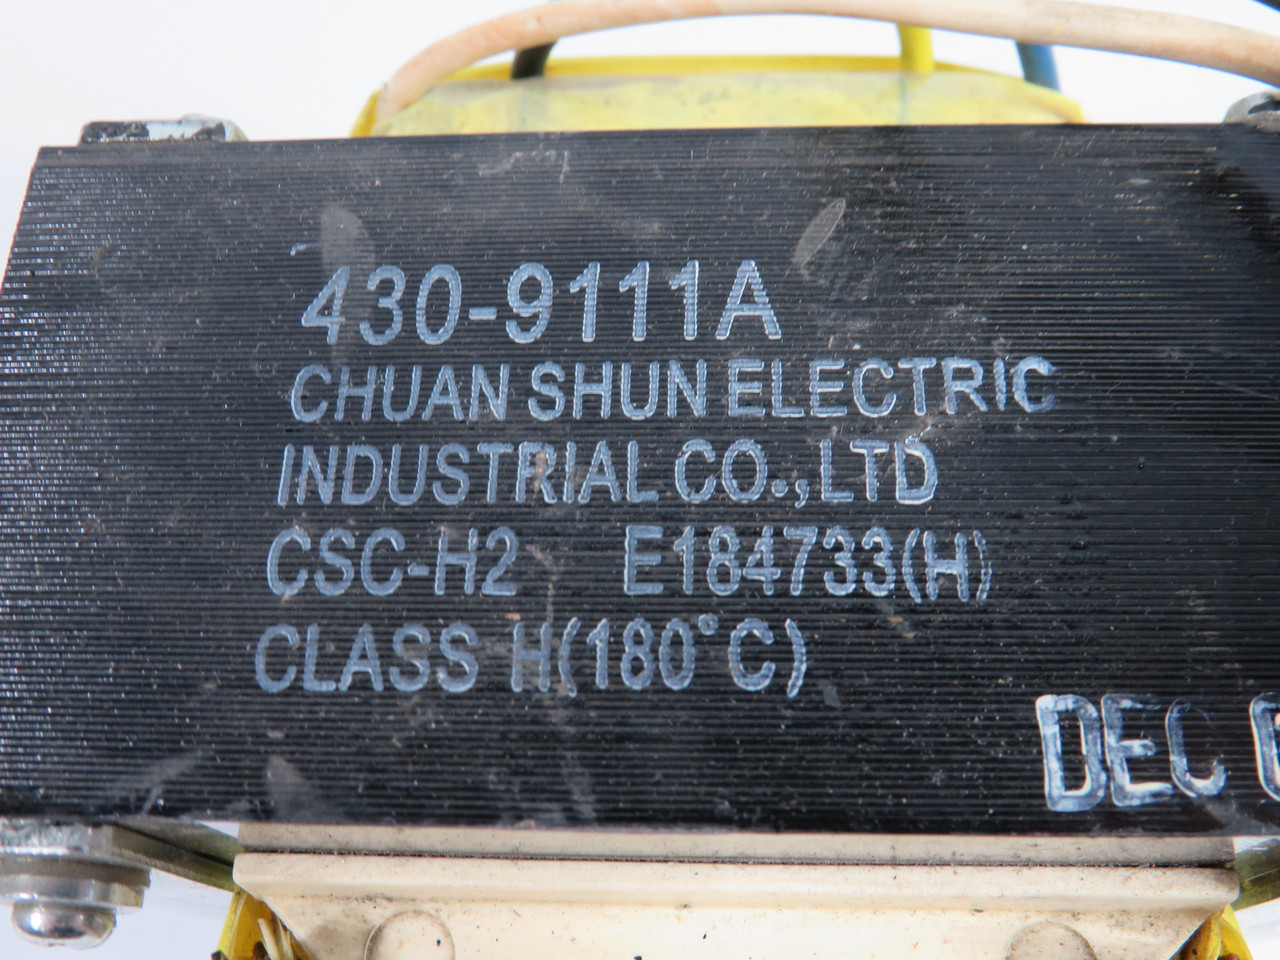 Chuan Shun Electric 430-9111A Transformer CSC-H2 E184733 Class H USED